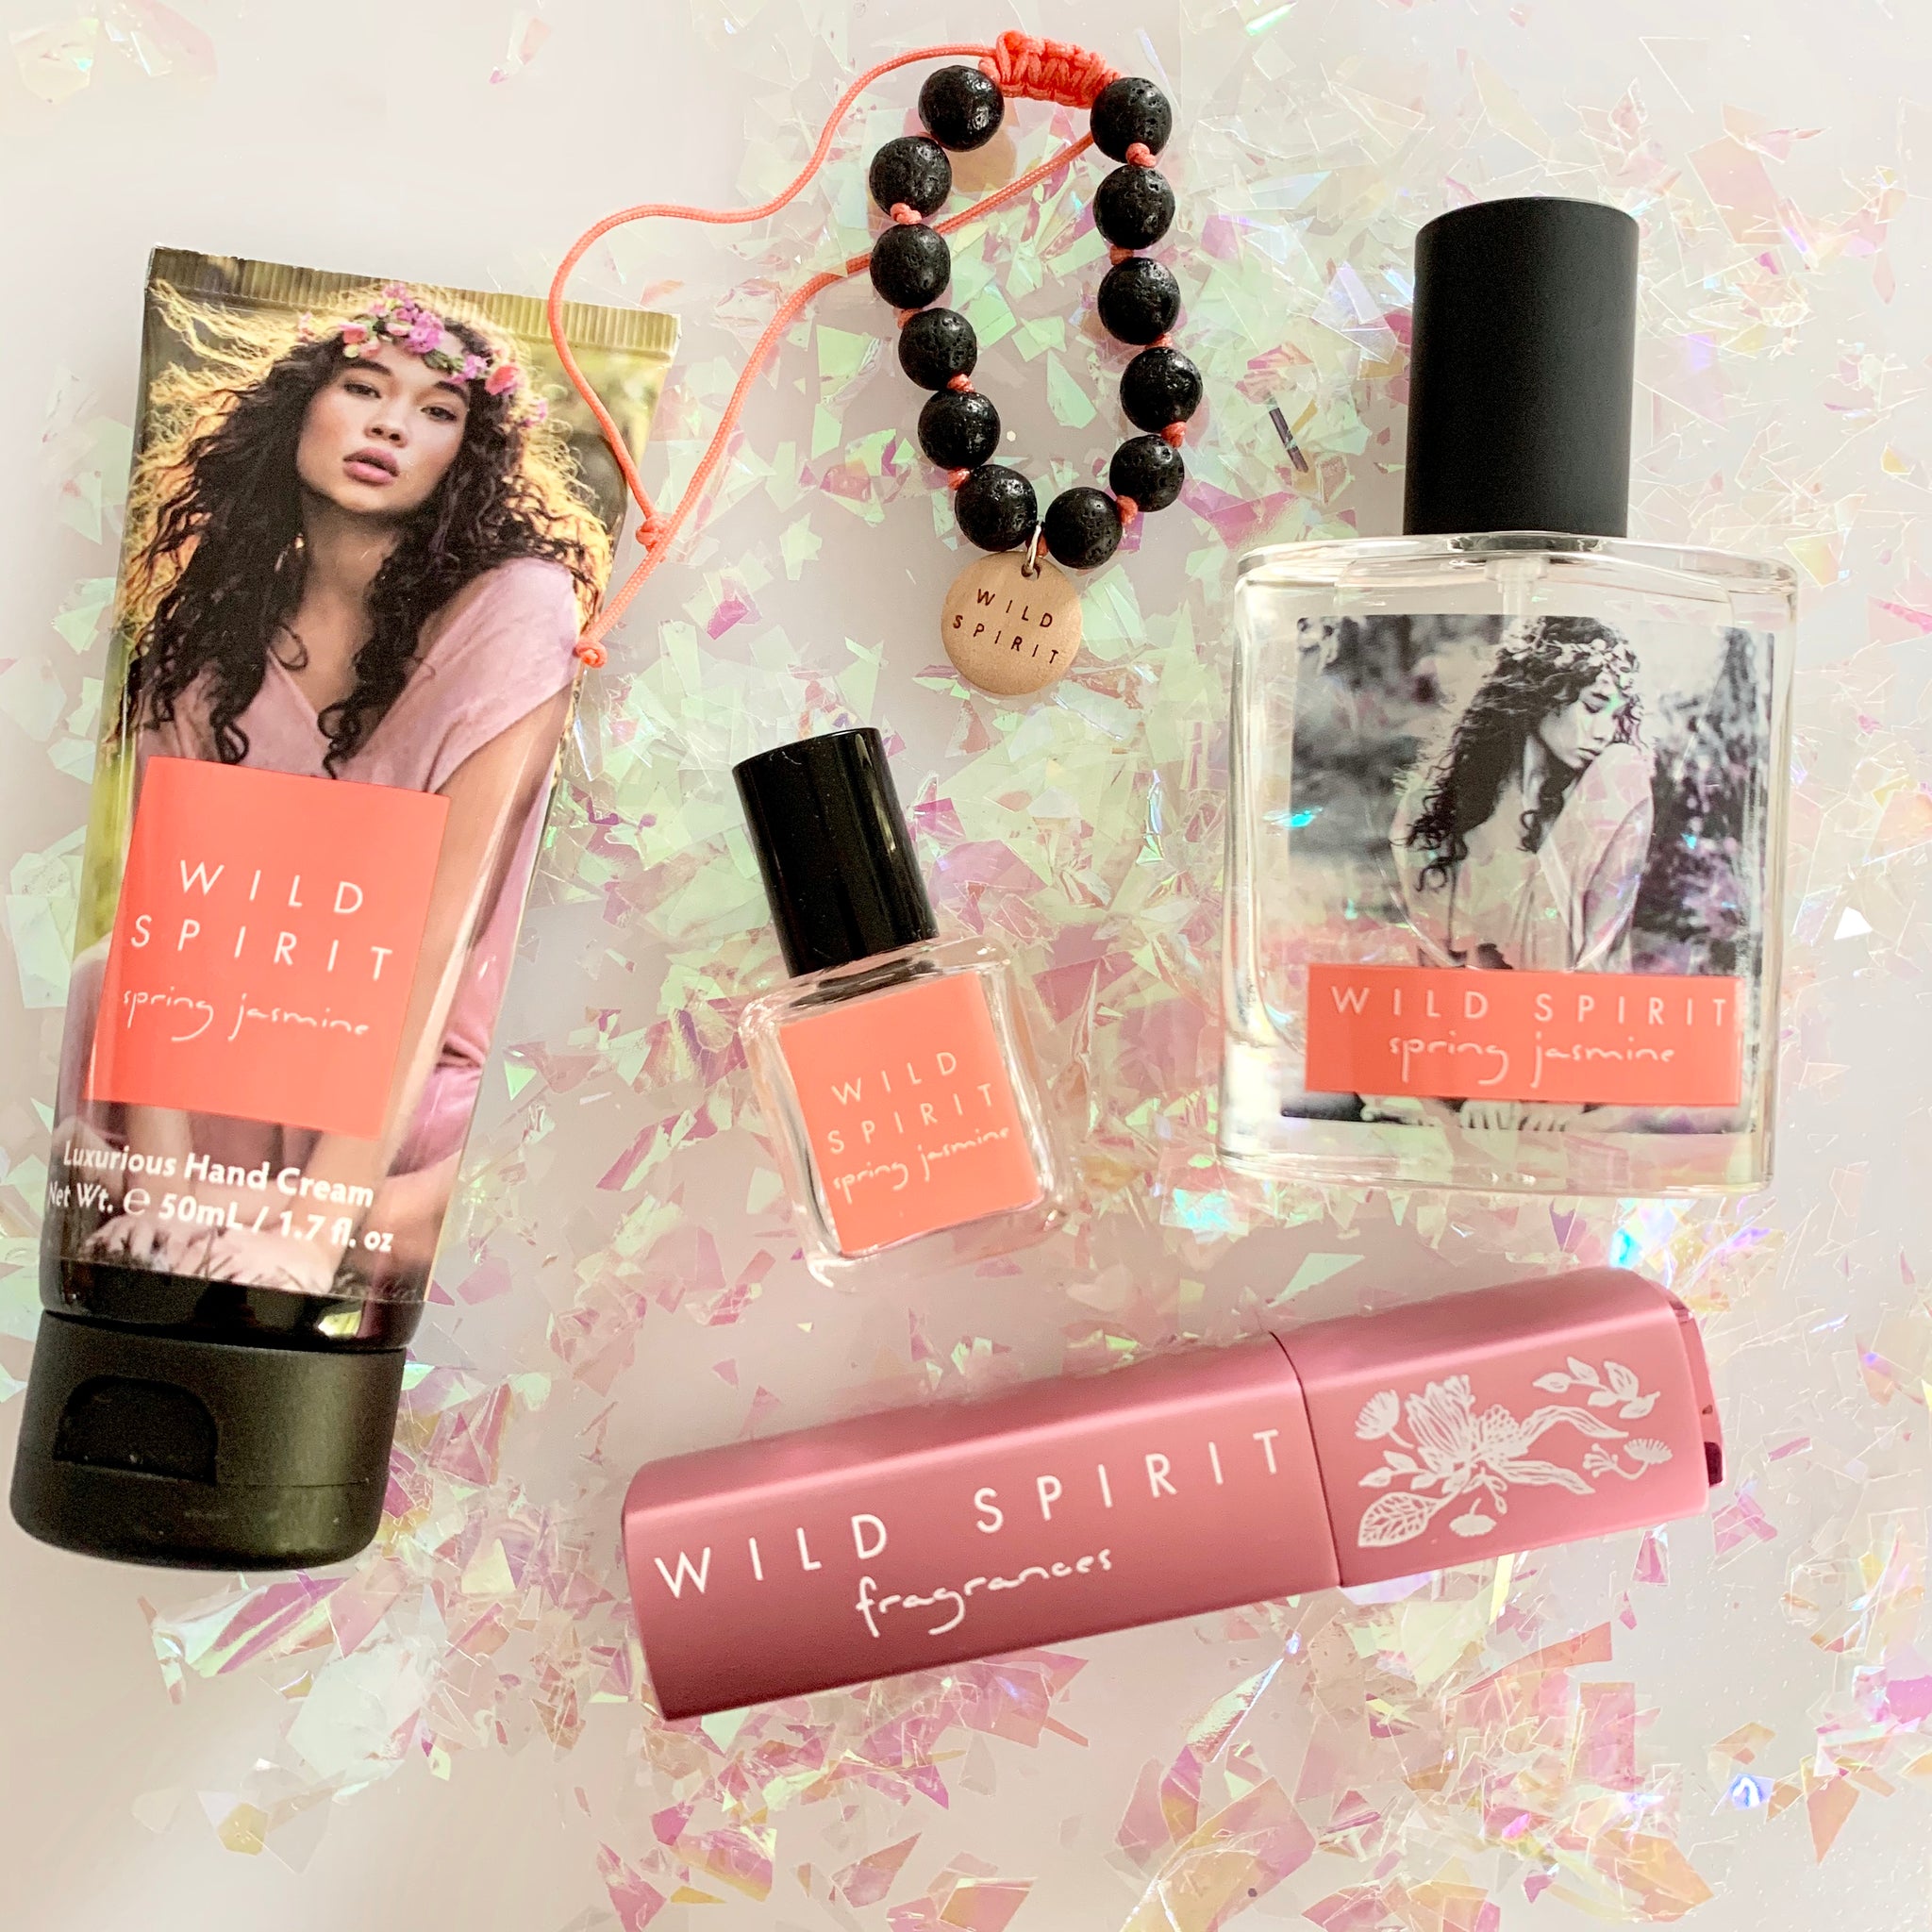 Spring Jasmine Lovers Perfume Gift Set from Wild Spirit